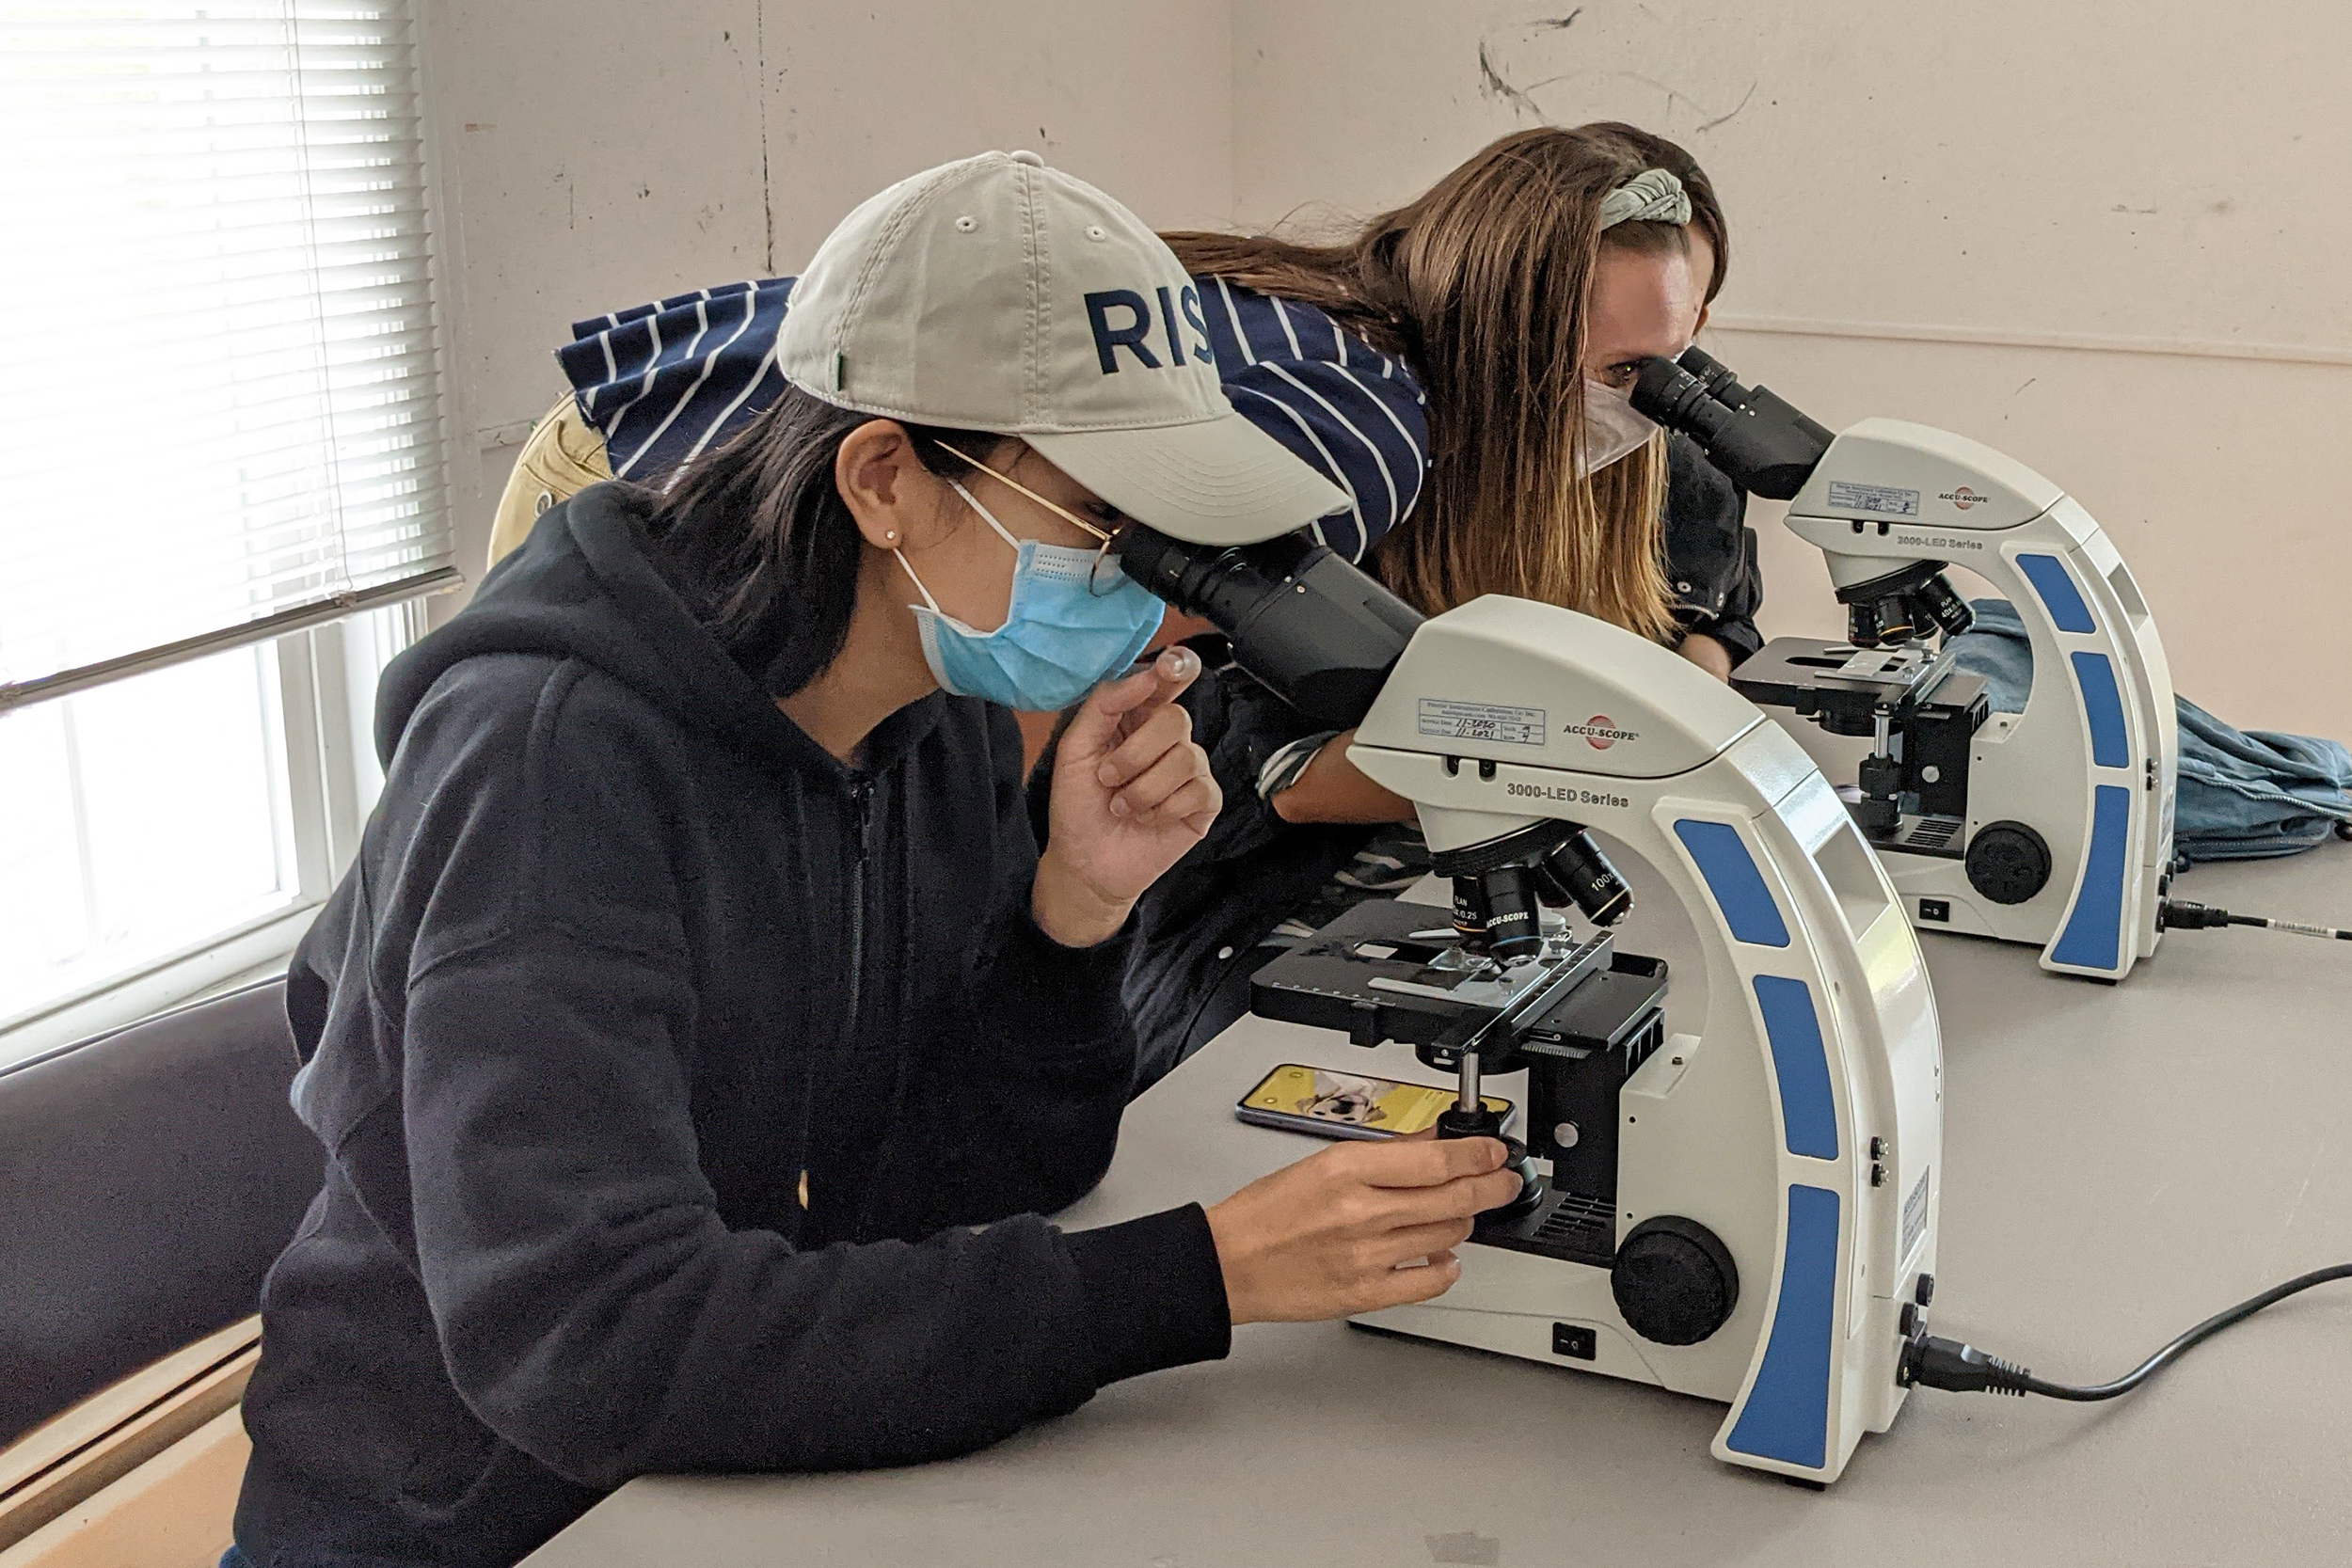 two students peer through microscopes